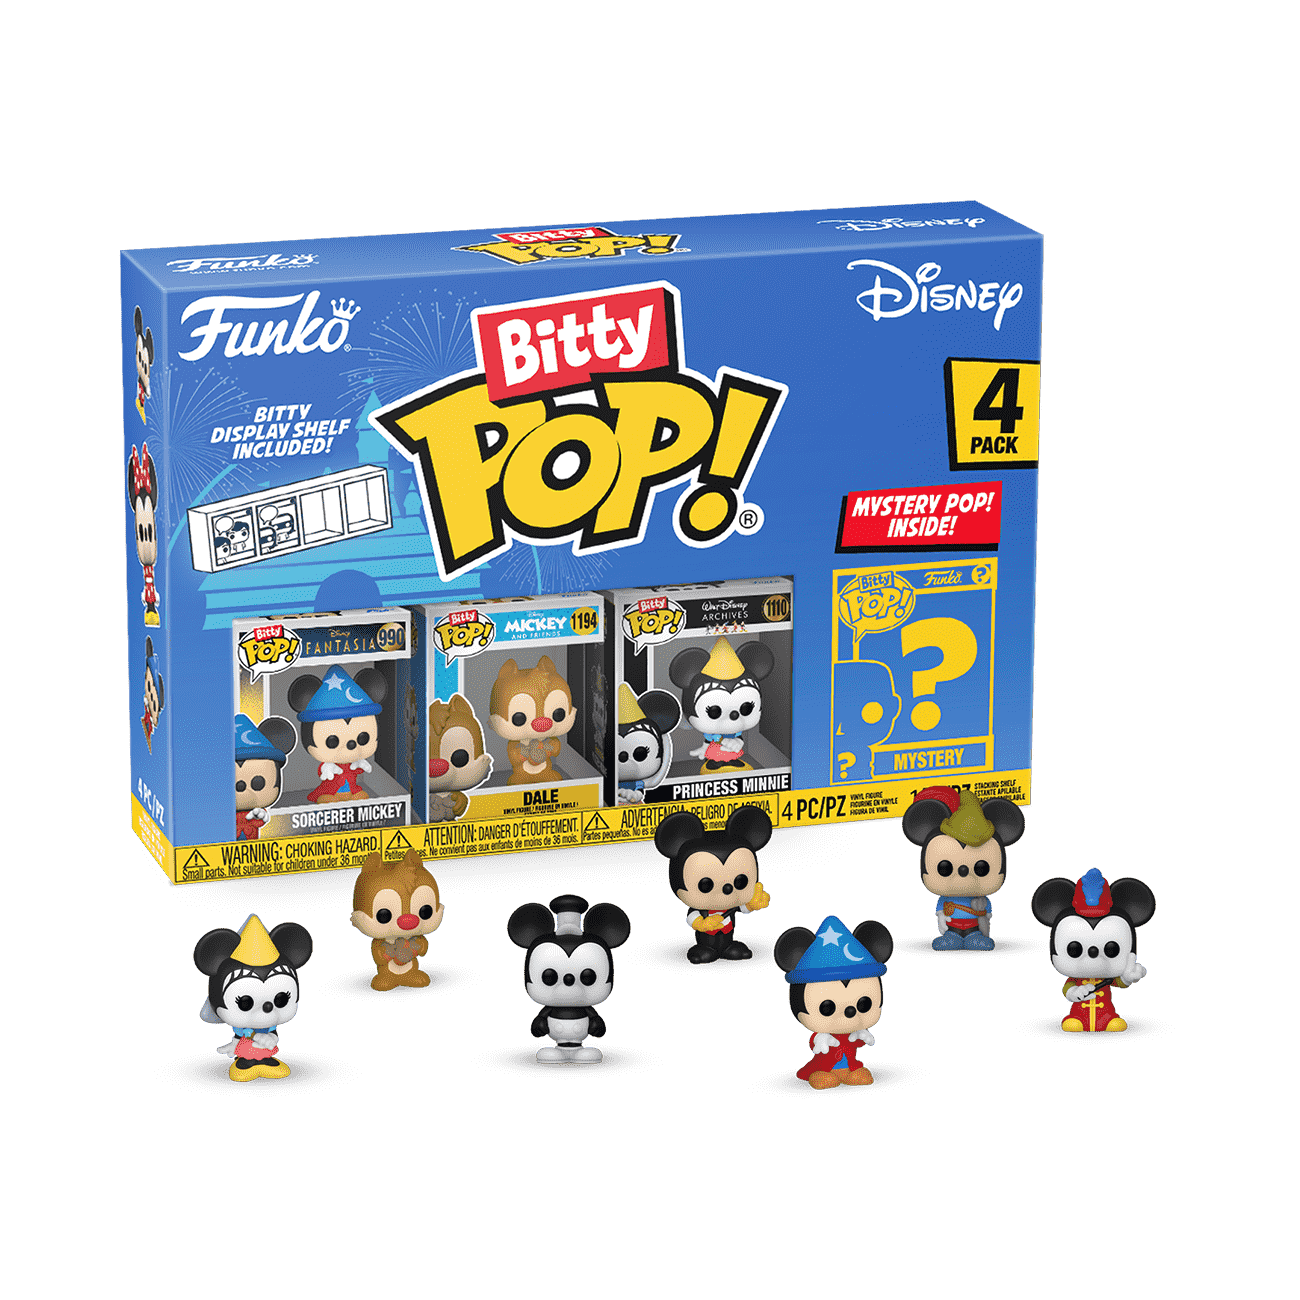 Buy Bitty Pop! Disney 4-Pack Series 3 at Funko.